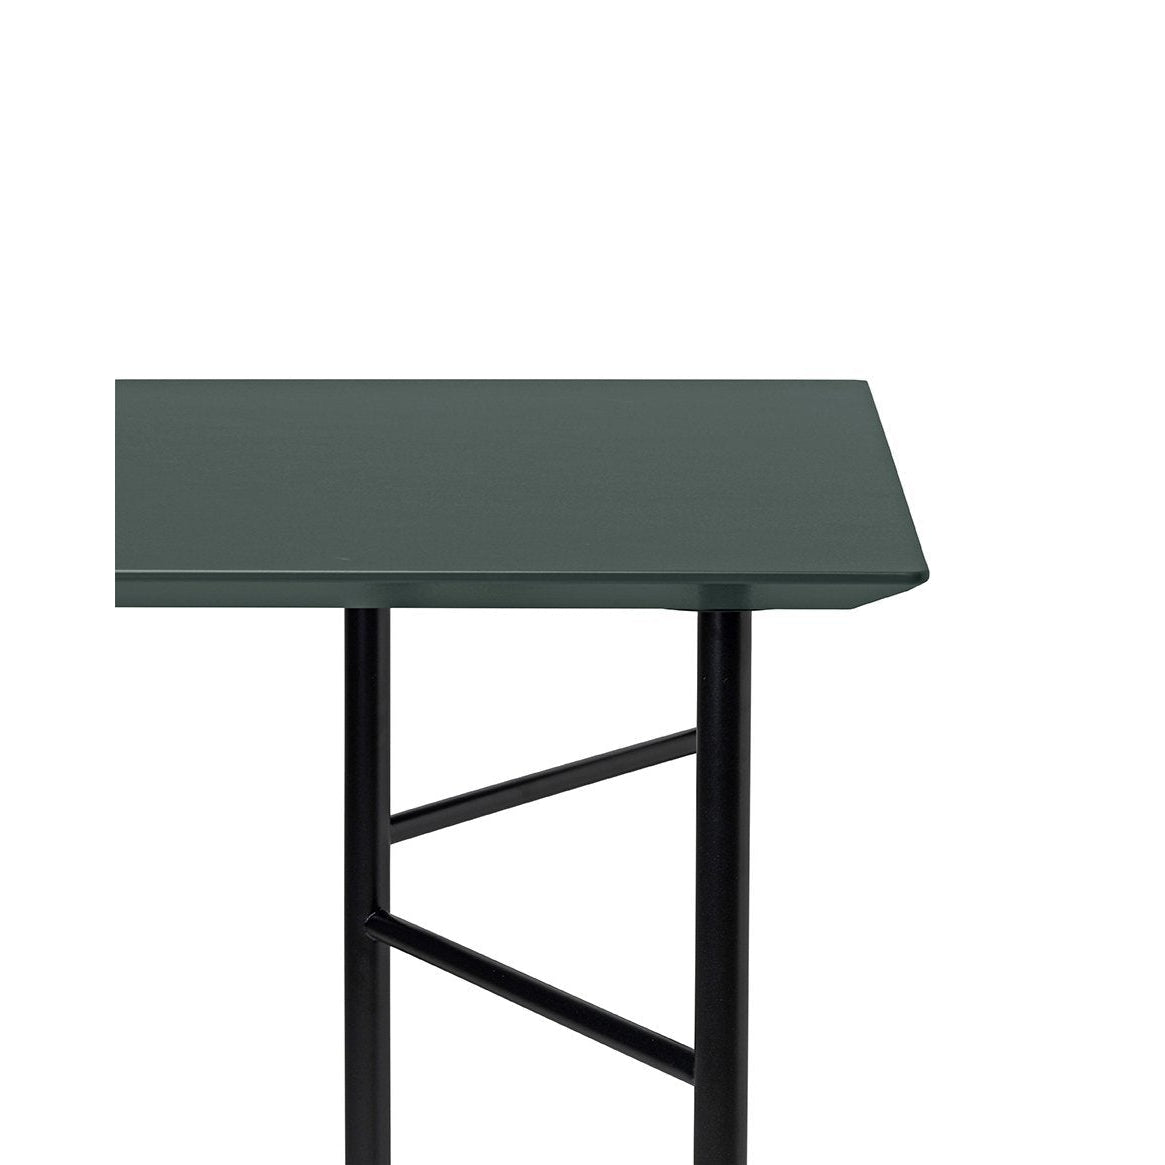 Ferm Living Mingle Desk oben, grün, 135 cm